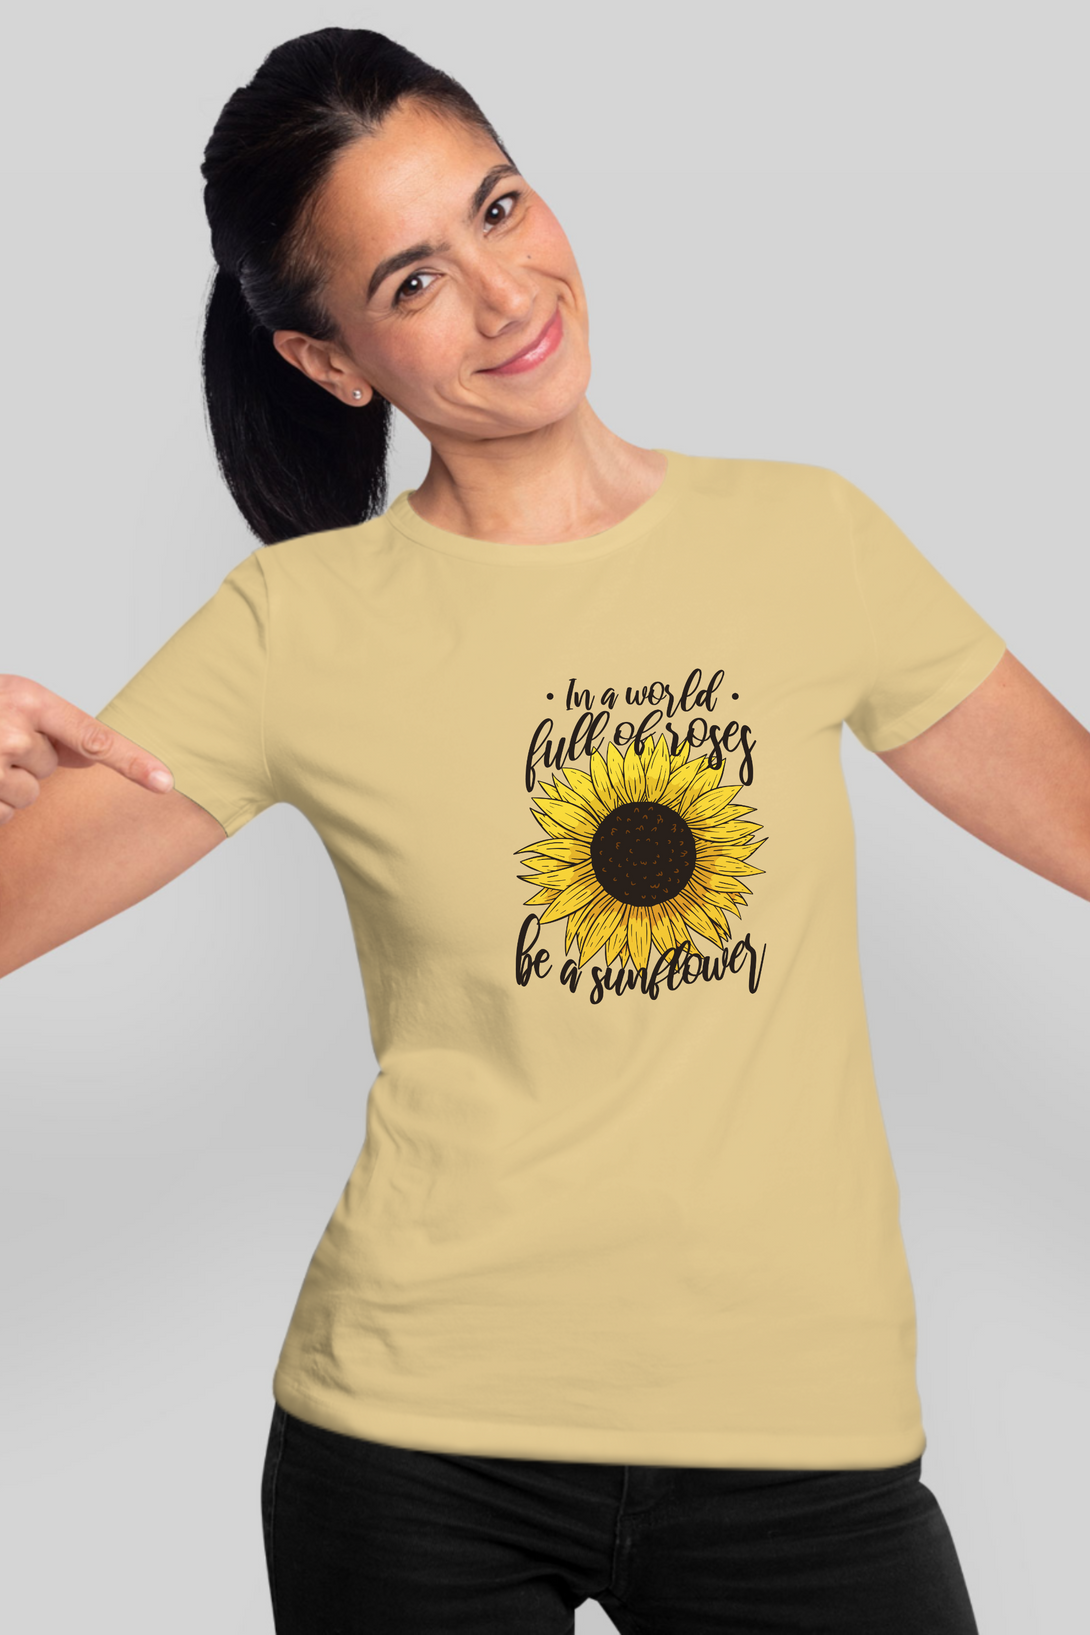 Sunflower Power Printed T-Shirt For Women - WowWaves - 9